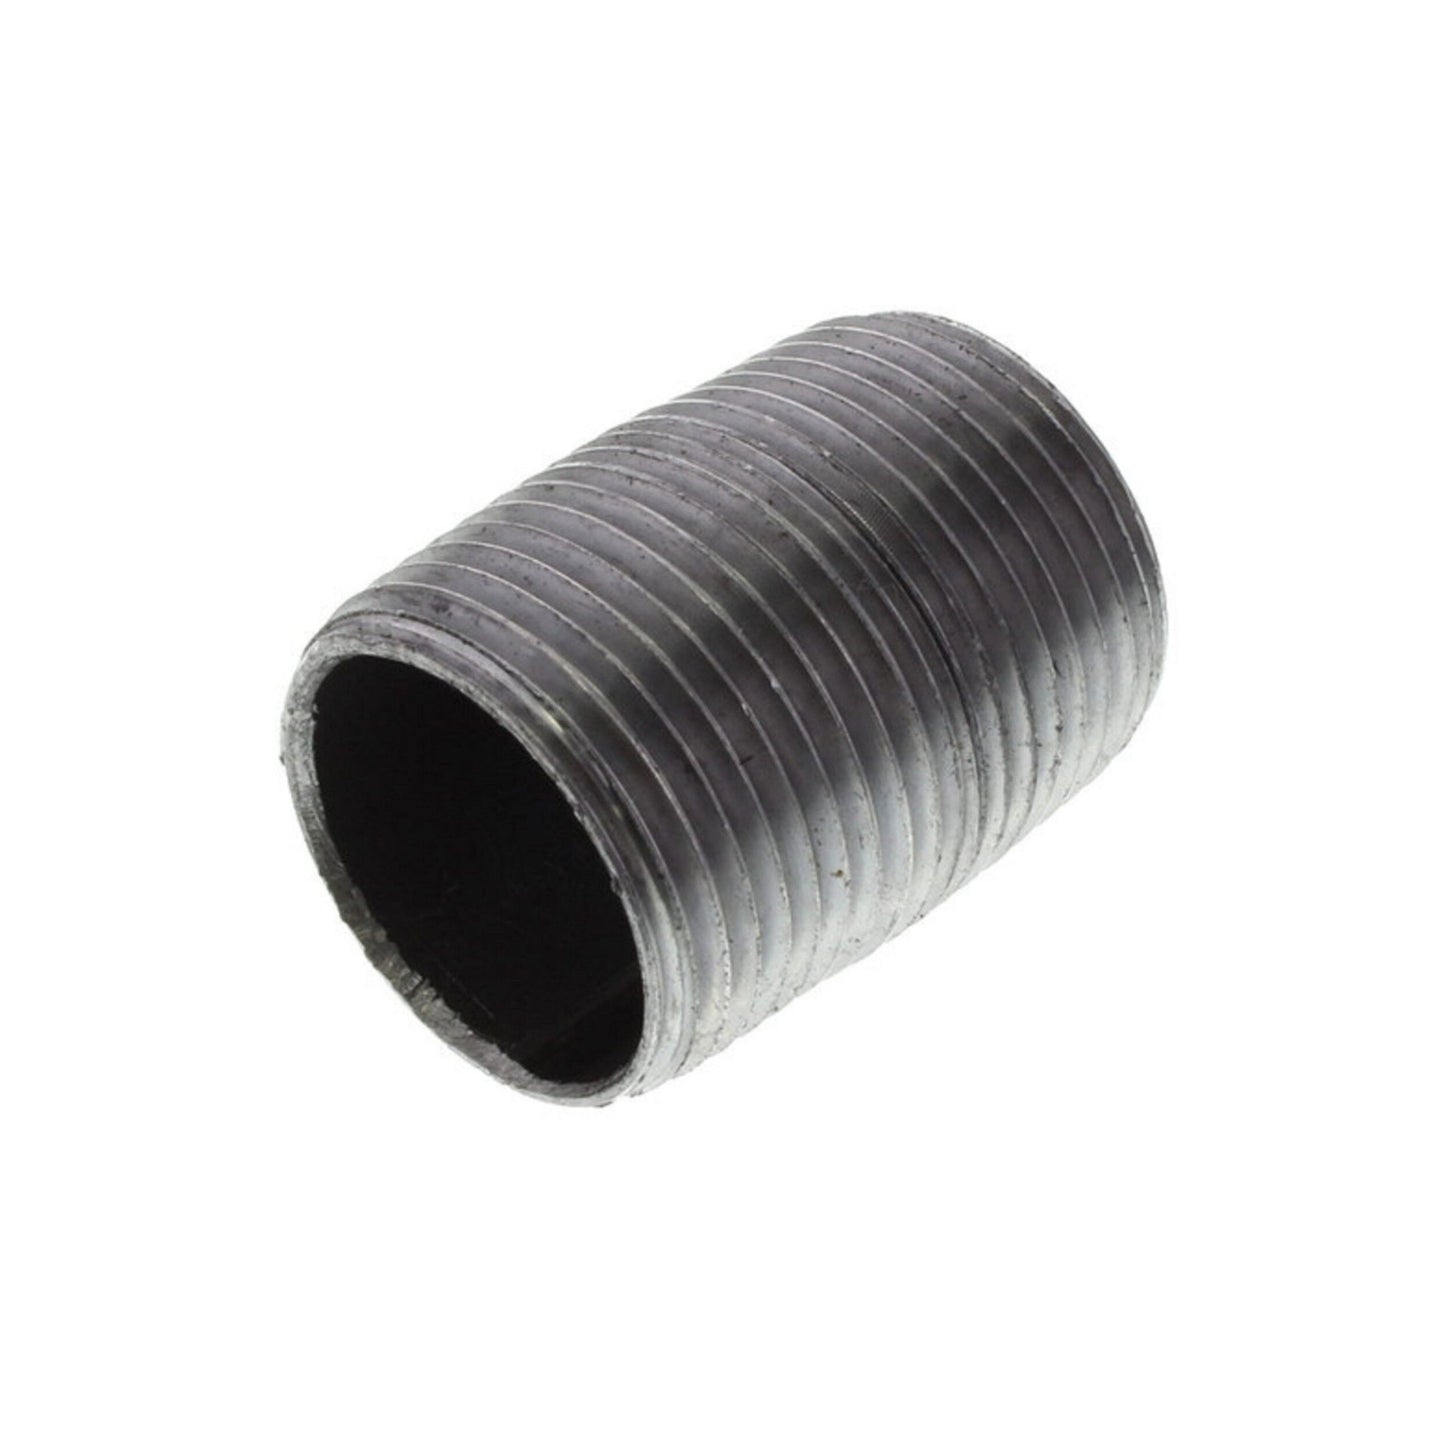 ZNB08CL - Black Steel Pipe Nipple - Domestic - 2" x Close